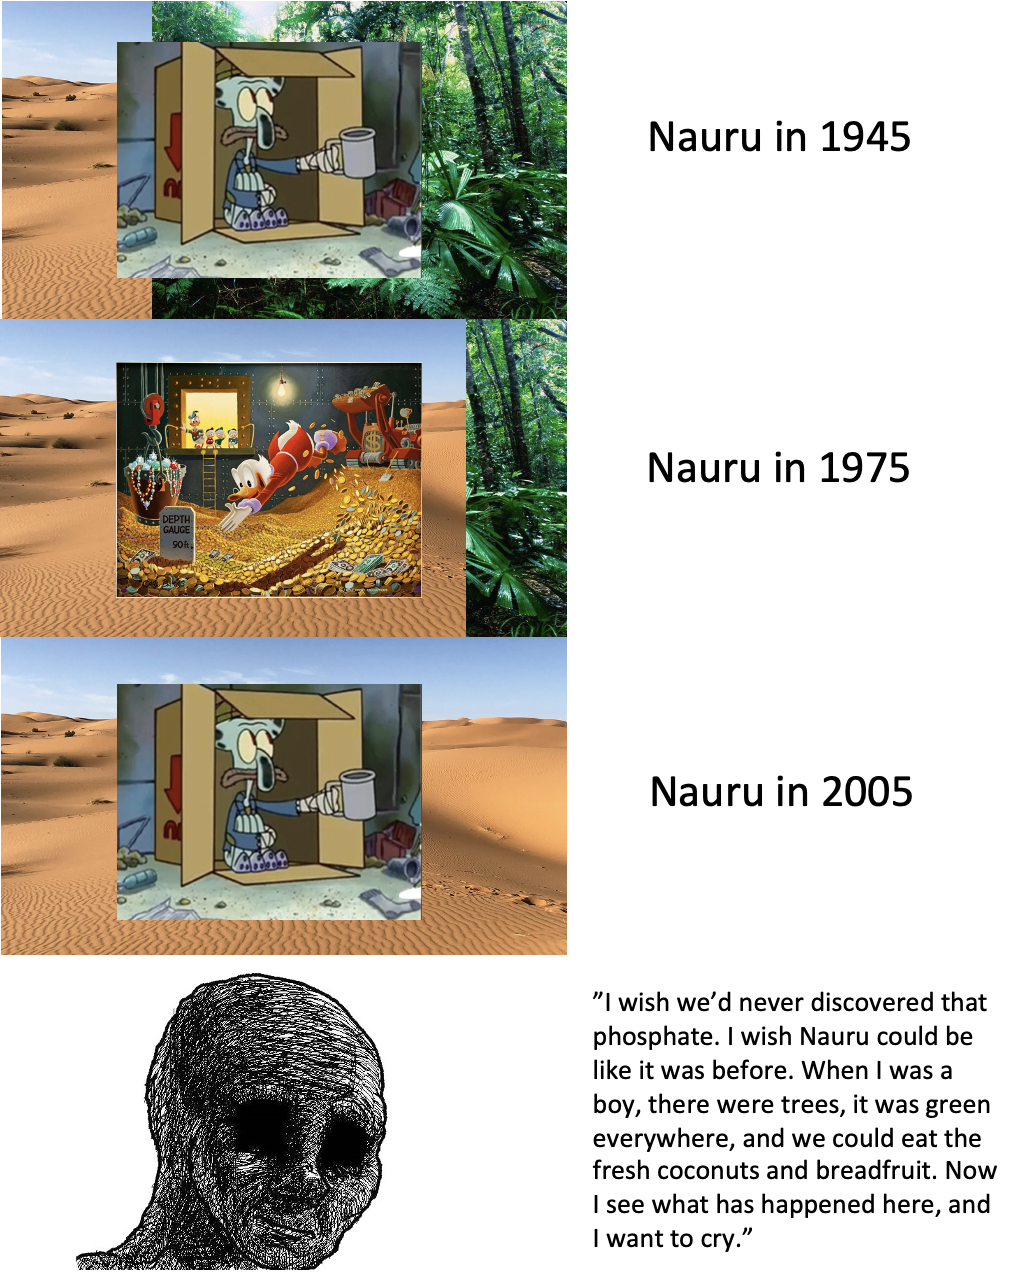 If you haven't heard the story of Nauru, It's pretty wild